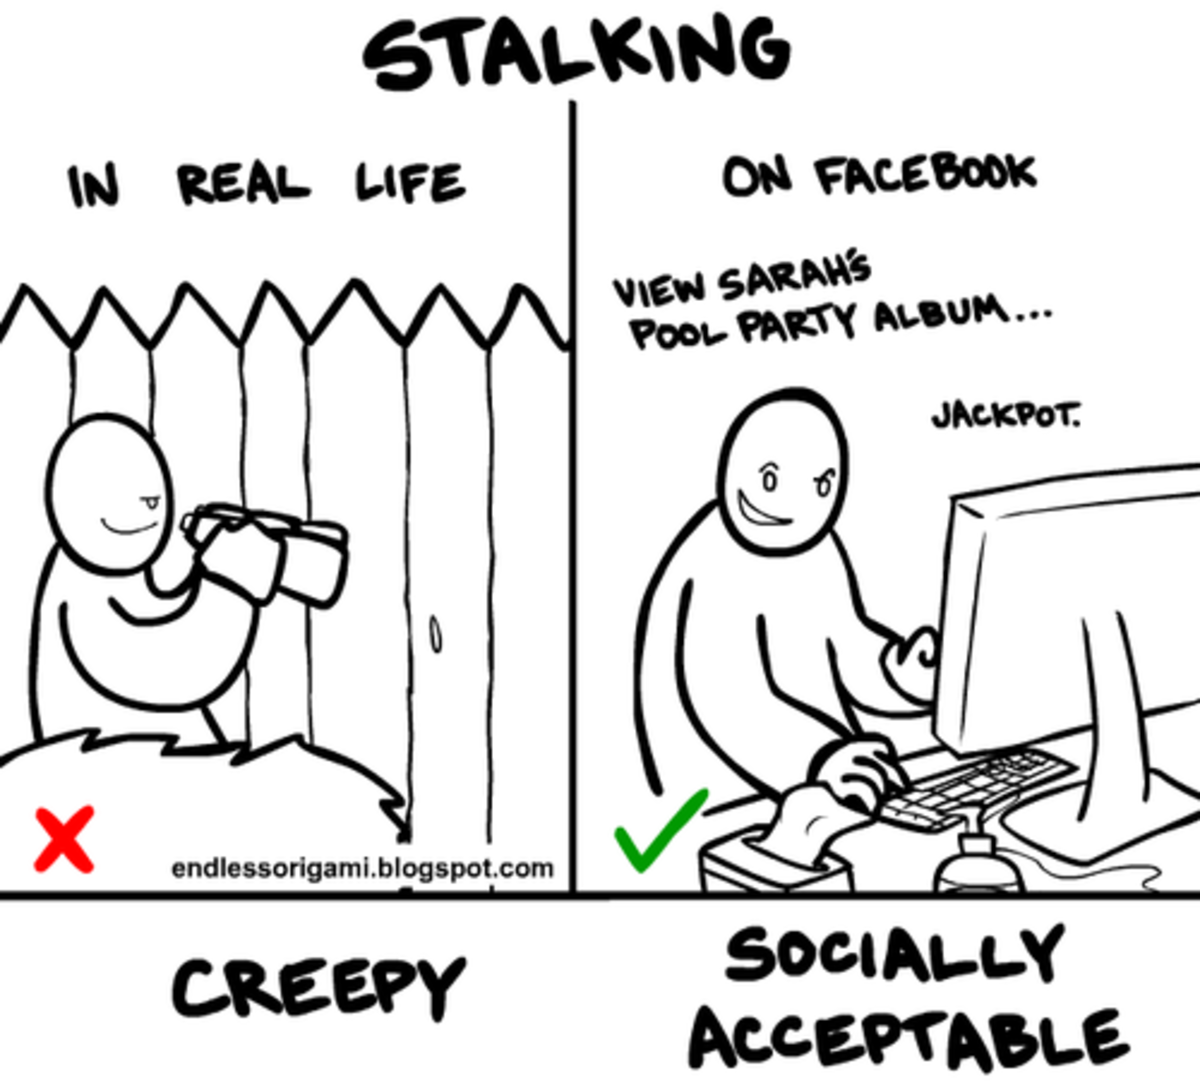 hate-stalking-on-social-media